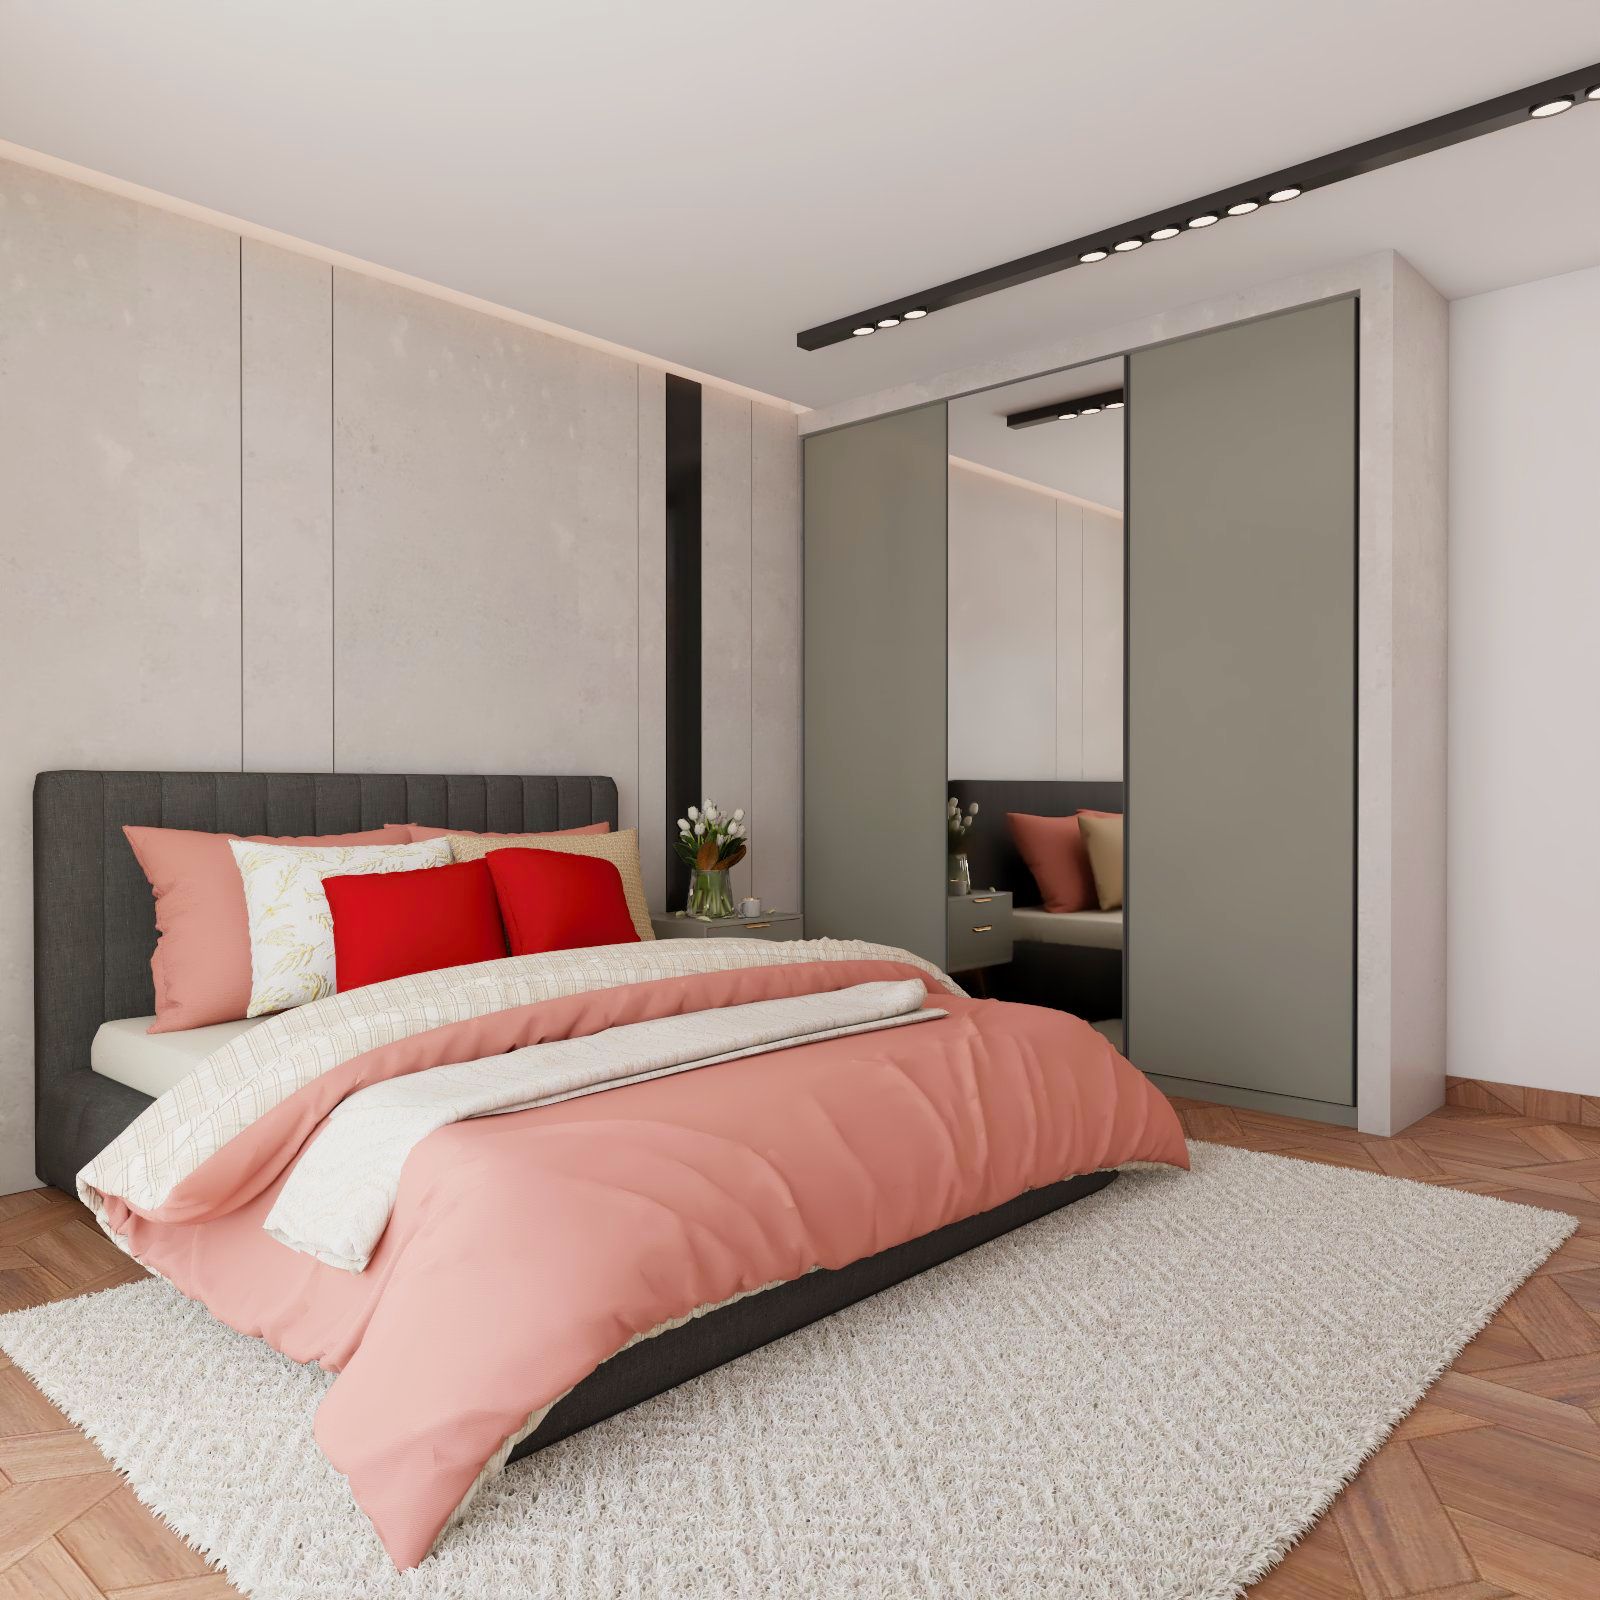 Contemporary Master Bedroom Design With Grey Bed And Three-Door Sliding Wardrobe With Mirror